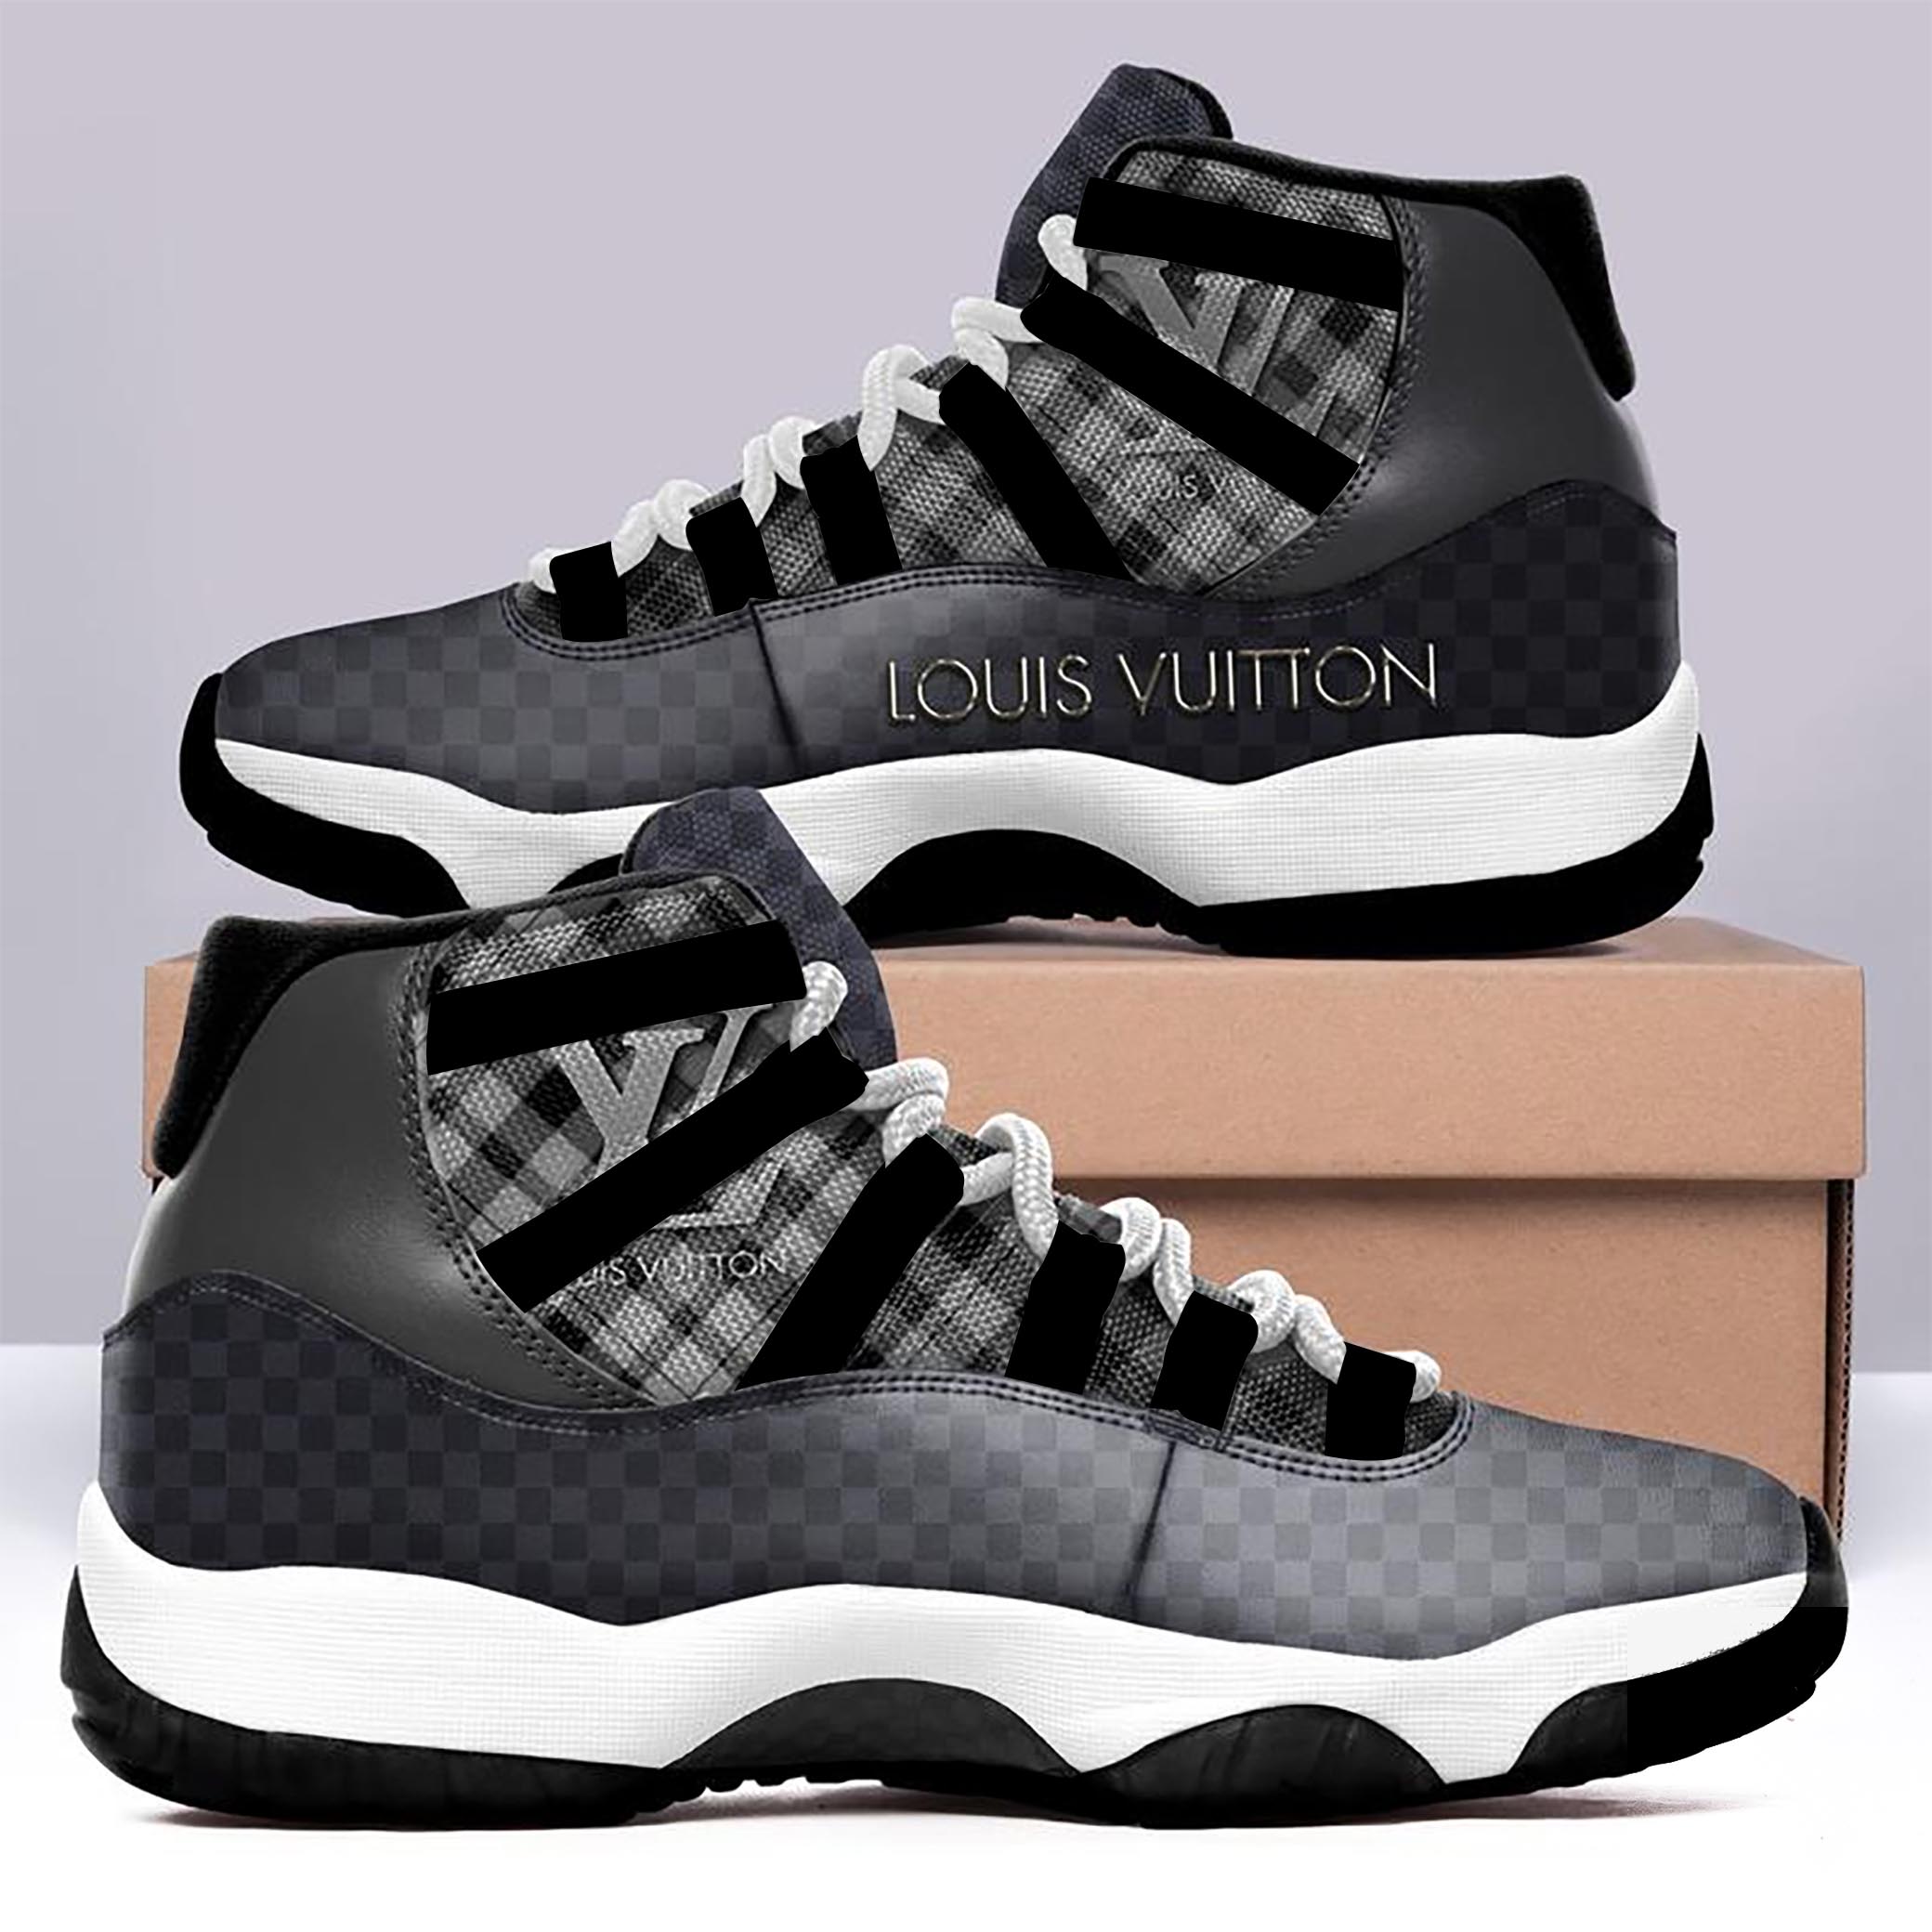 Black Grey Louis Vuitton Air Jordan 11 Sneakers Shoes Hot 2022 LV Gifts For Men Women HT